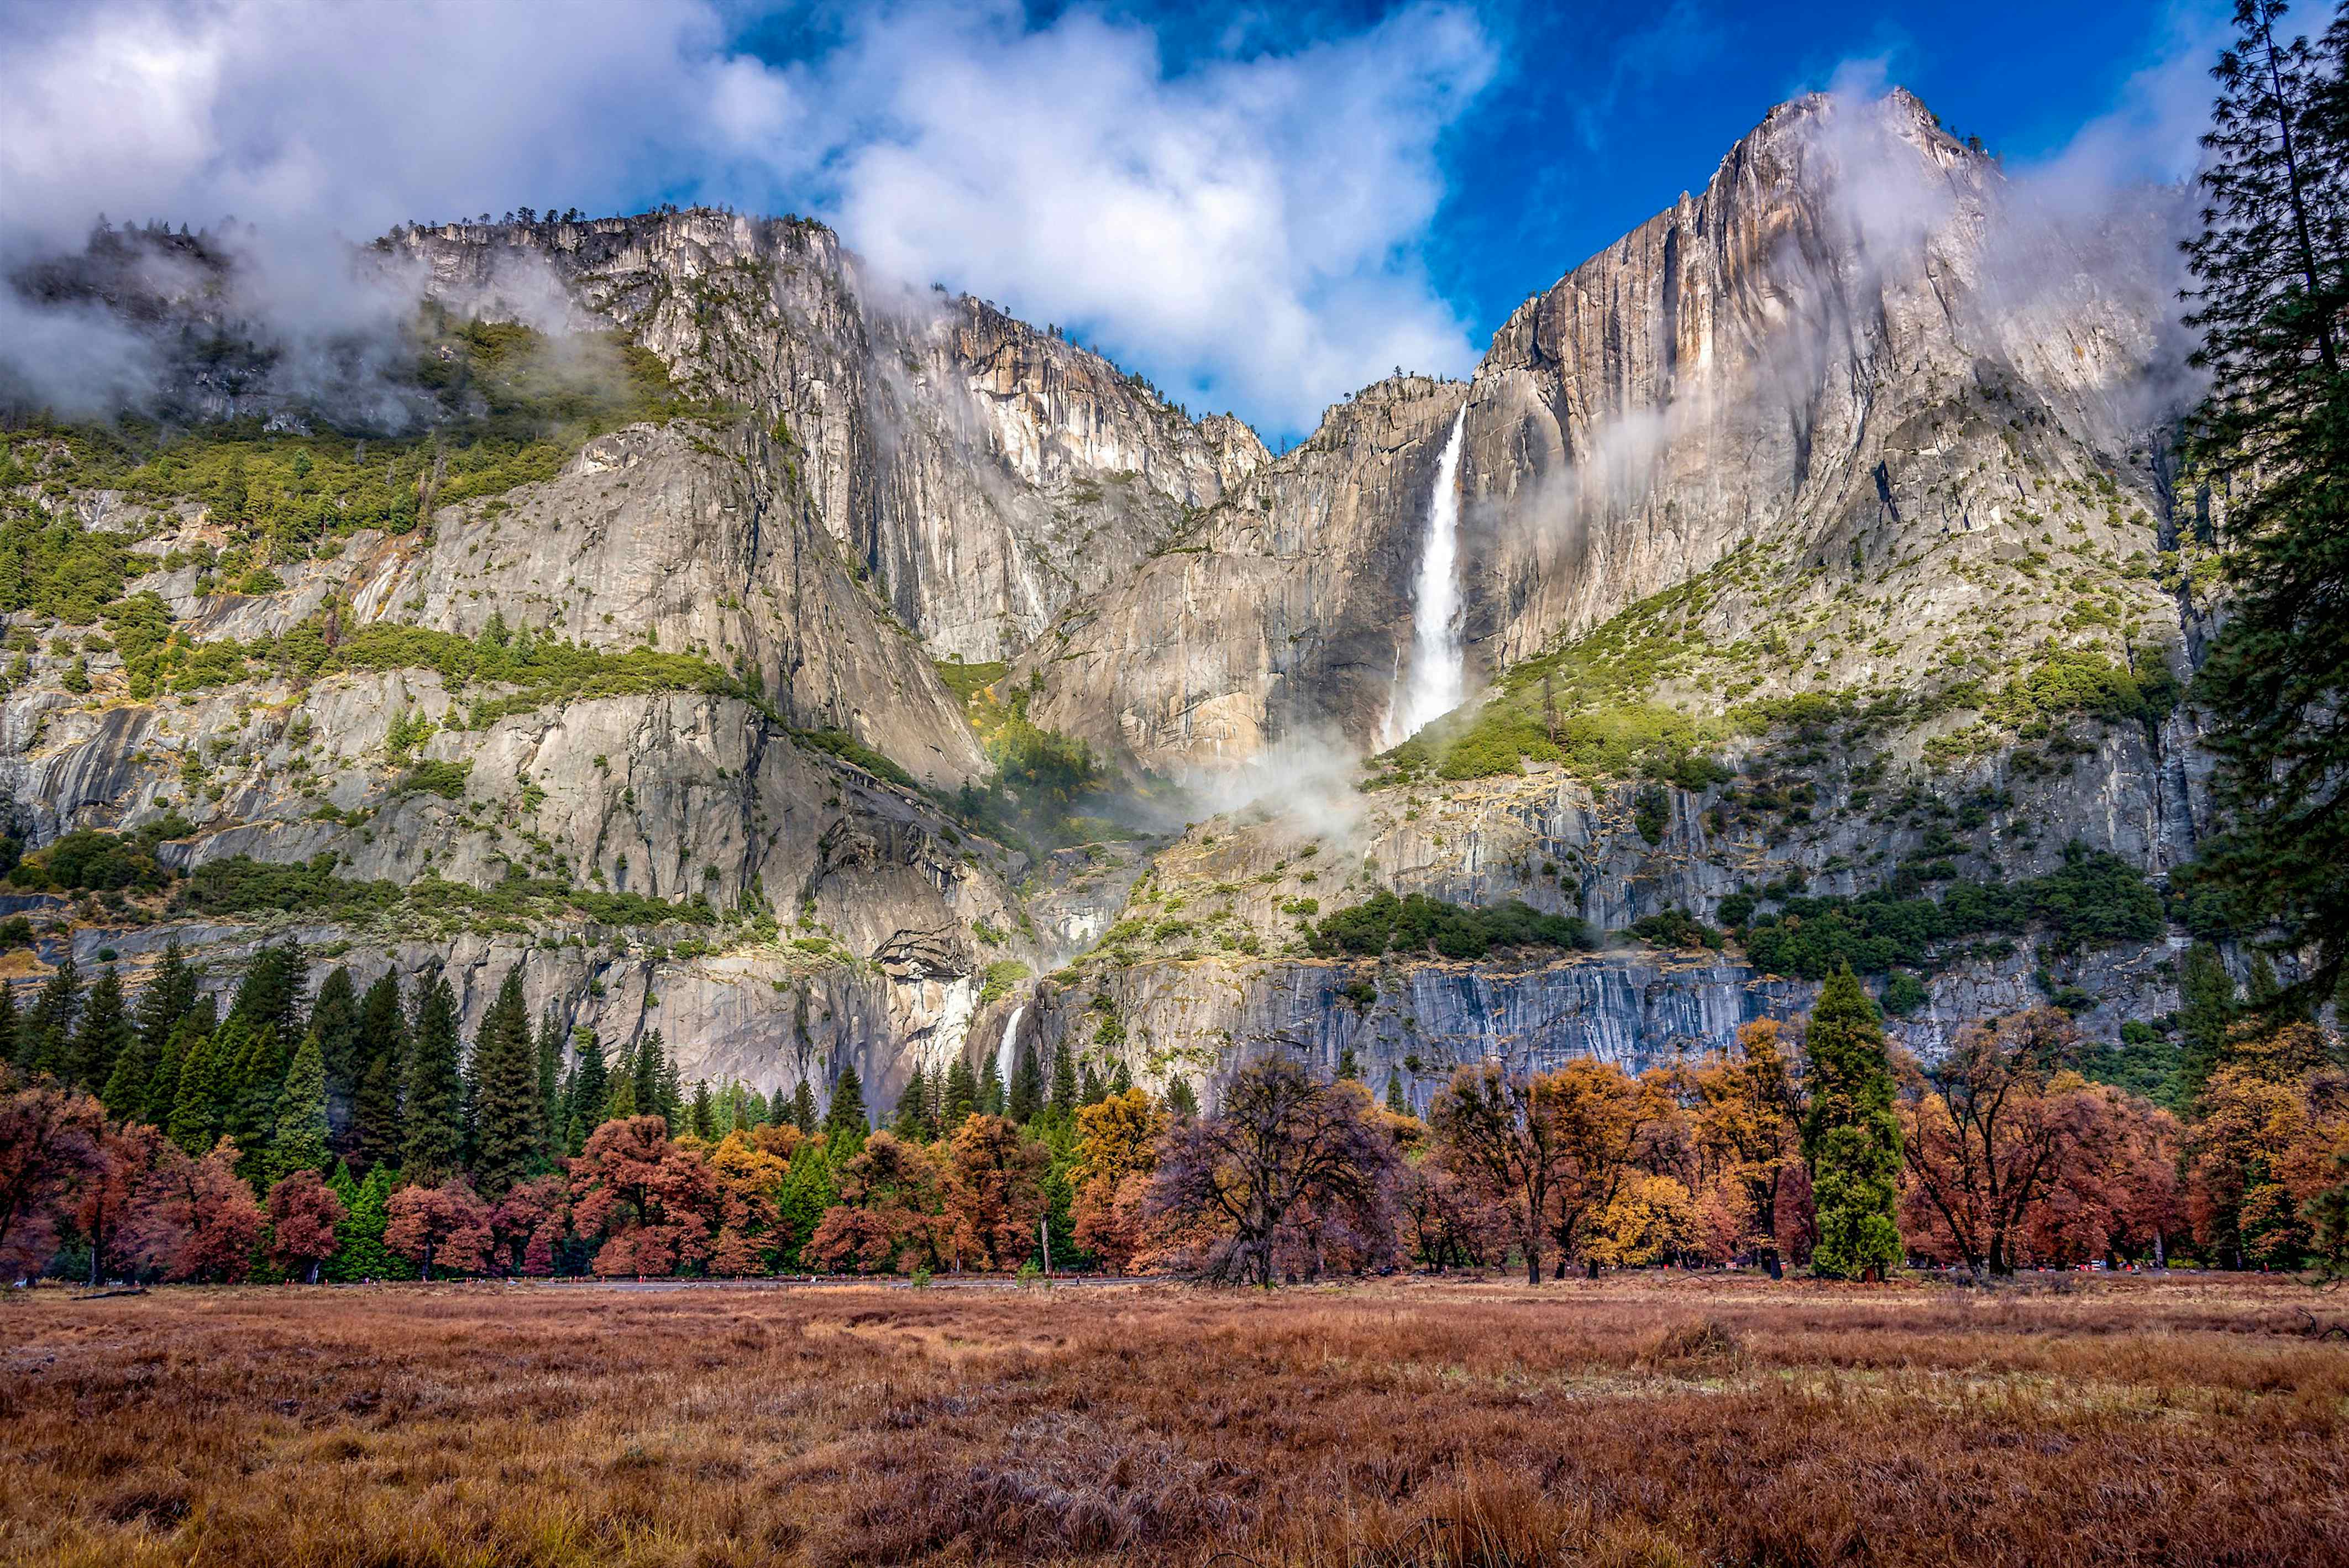 california national parks road trip 1 week